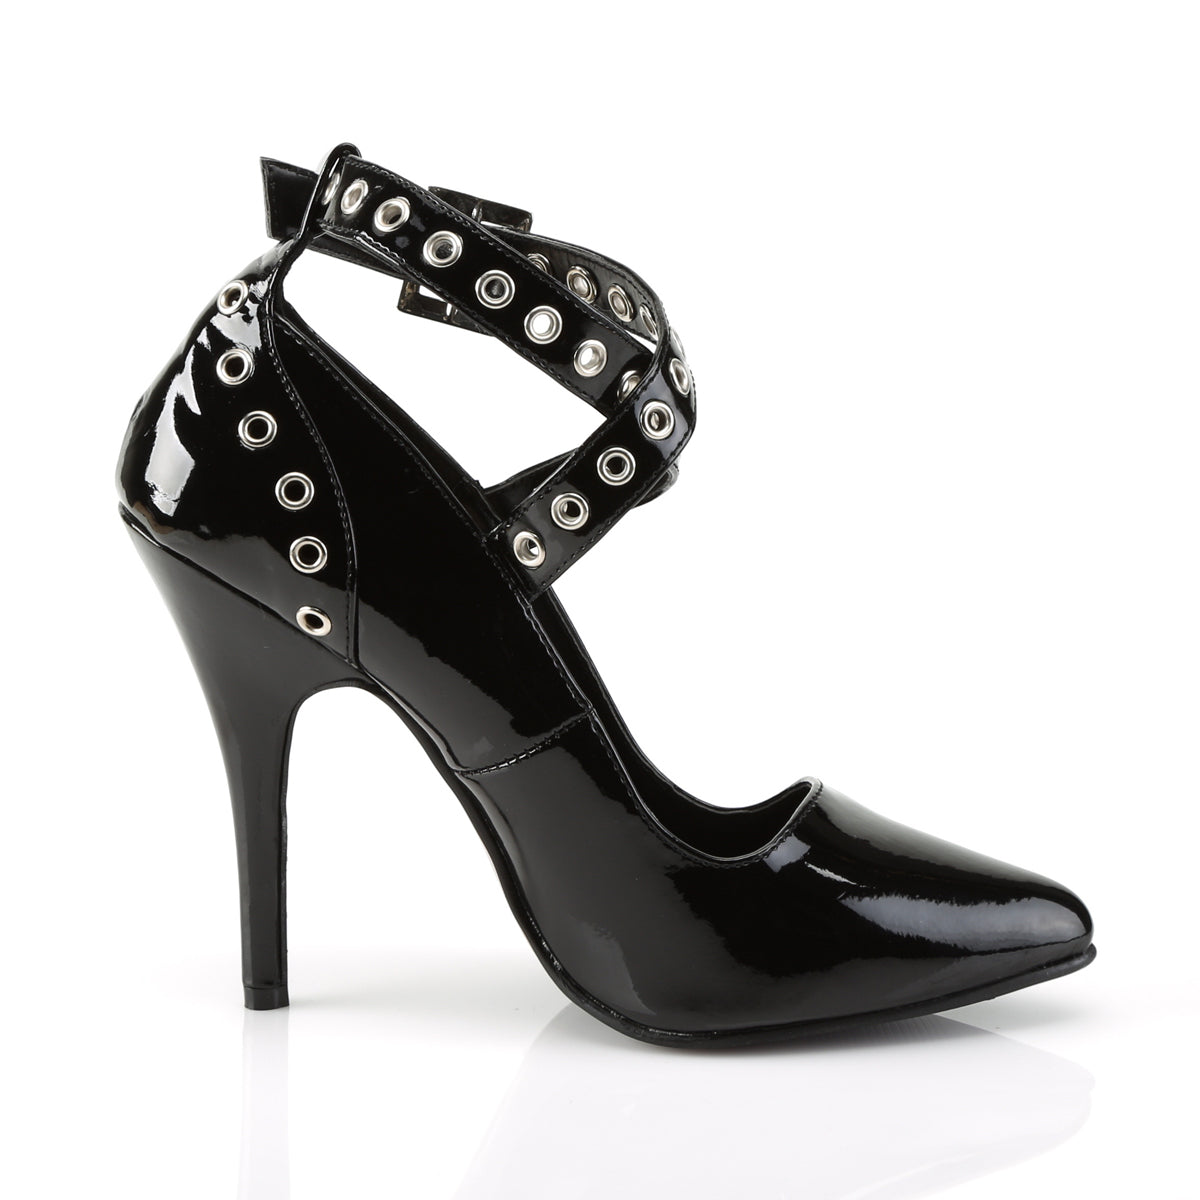 SEDUCE-443 Sexy Shoes 5" Heel Black Patent Fetish Footwear-Pleaser- Sexy Shoes Fetish Heels